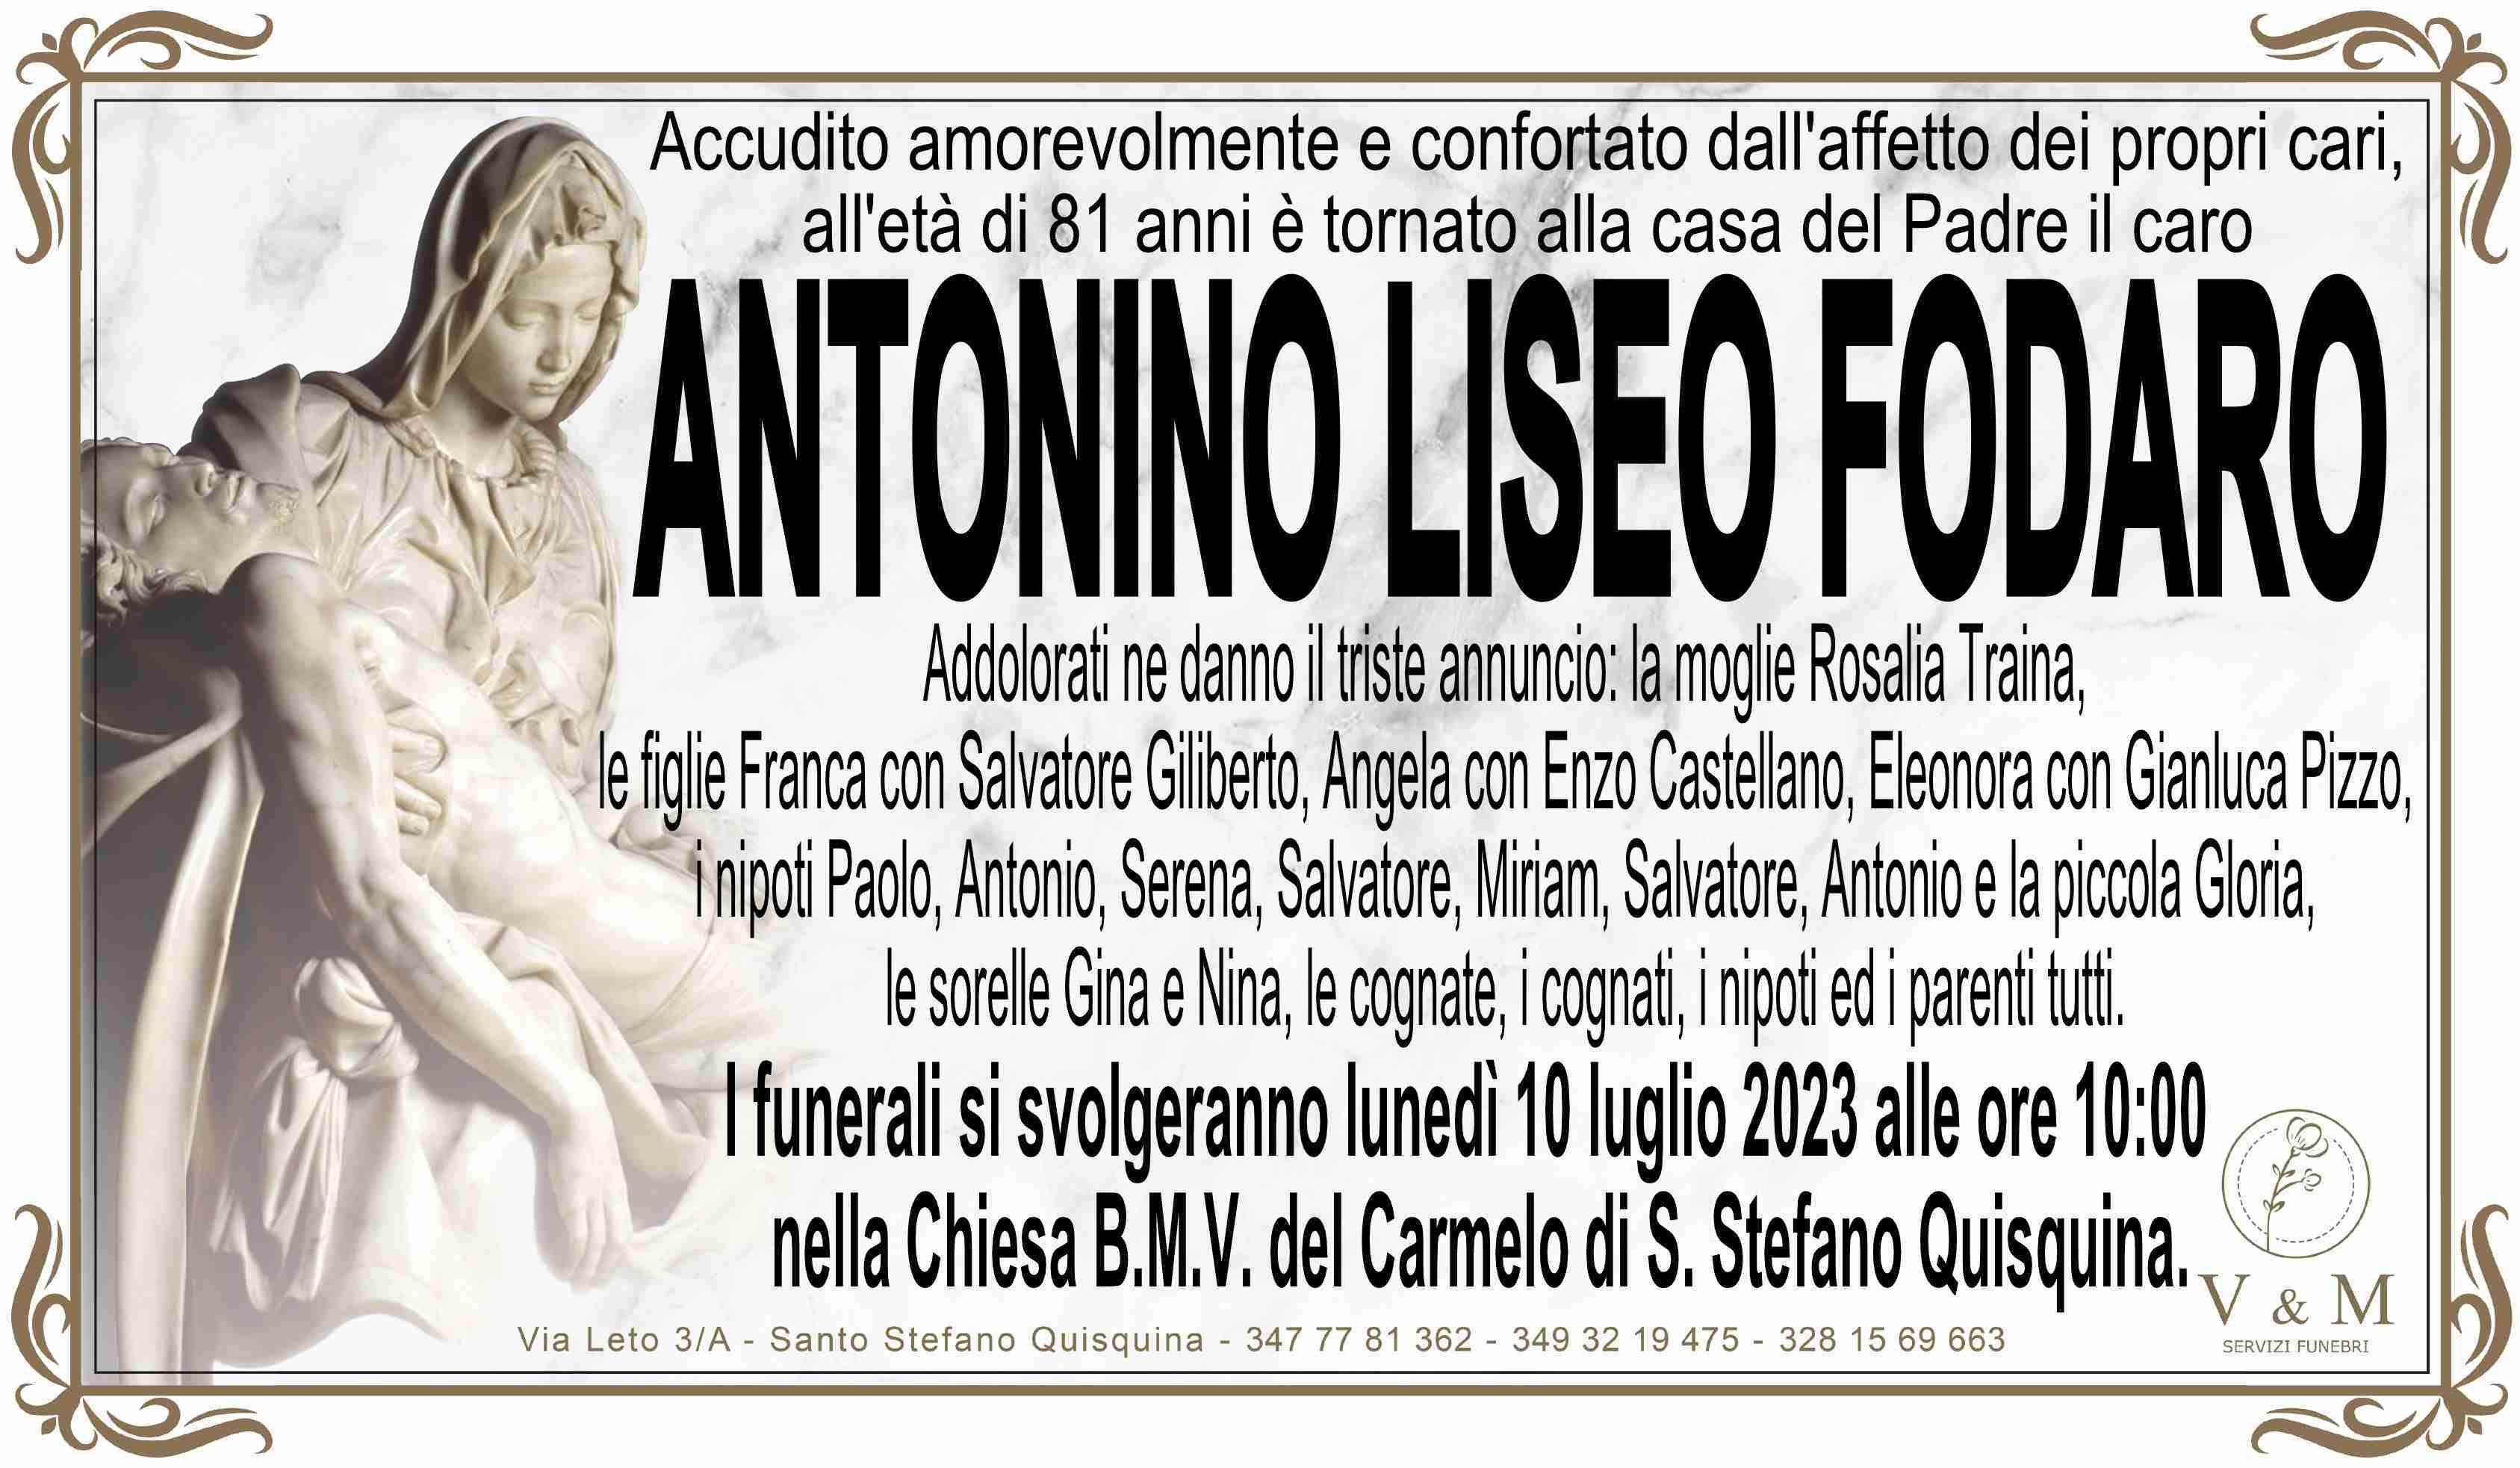 Antonino Liseo Fodaro